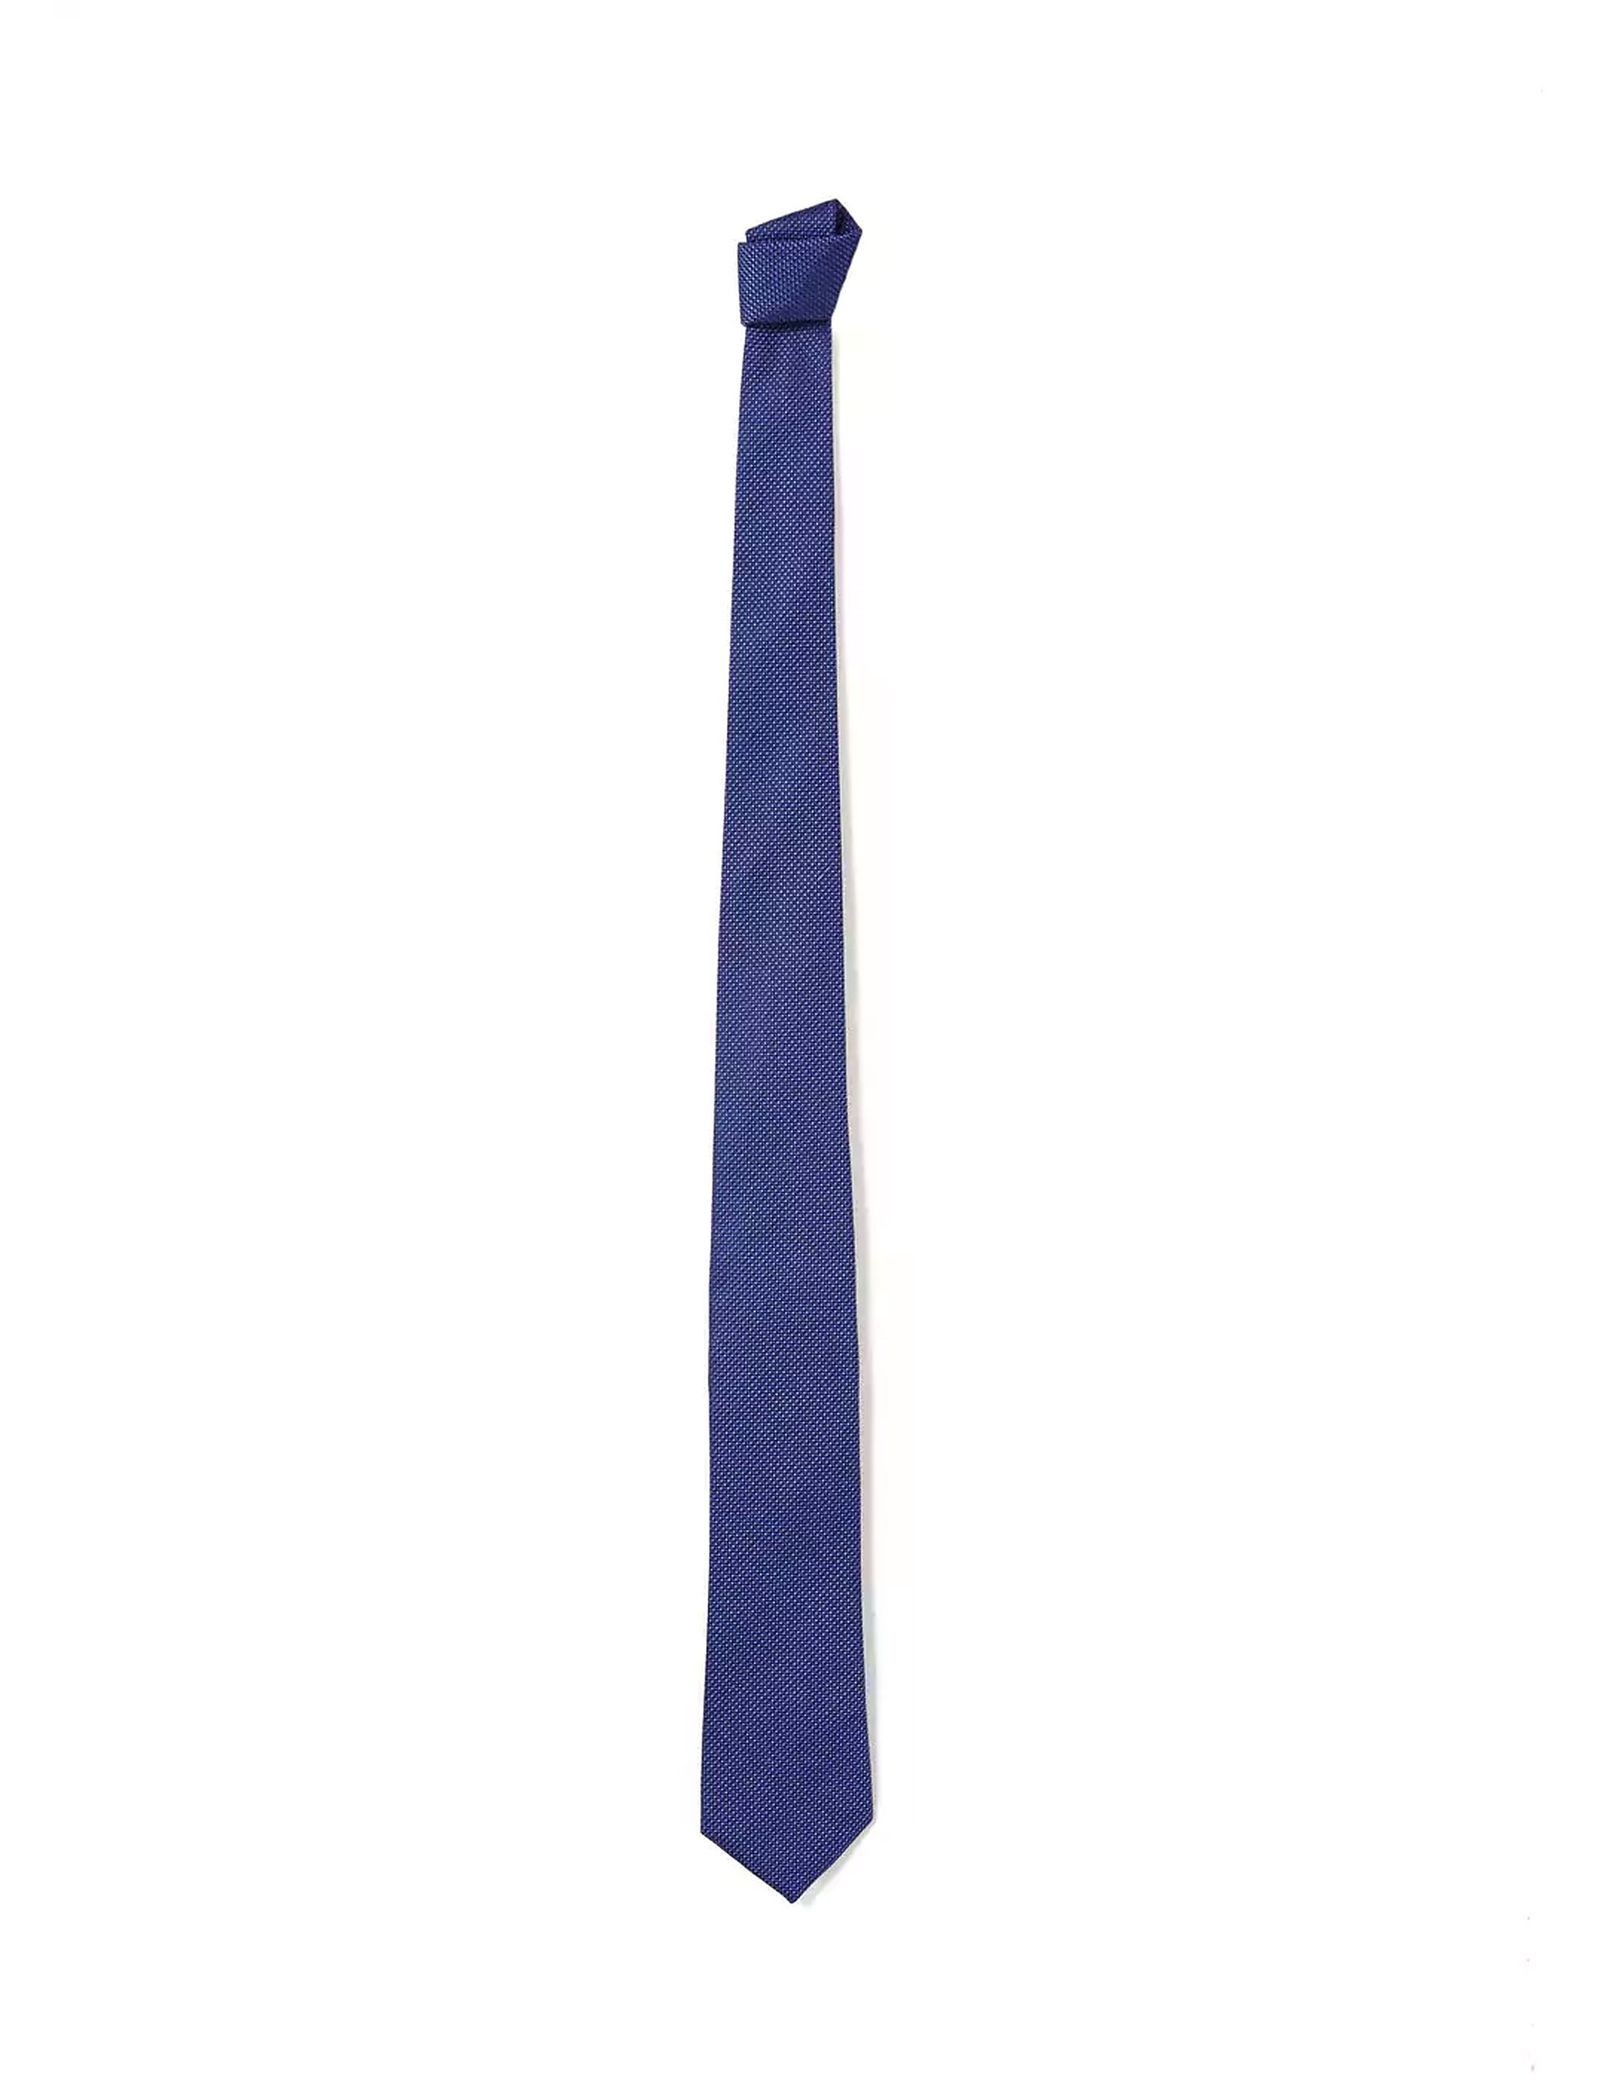 کراوات مانگو مدل 23090555 تک سایز - آبي - 2